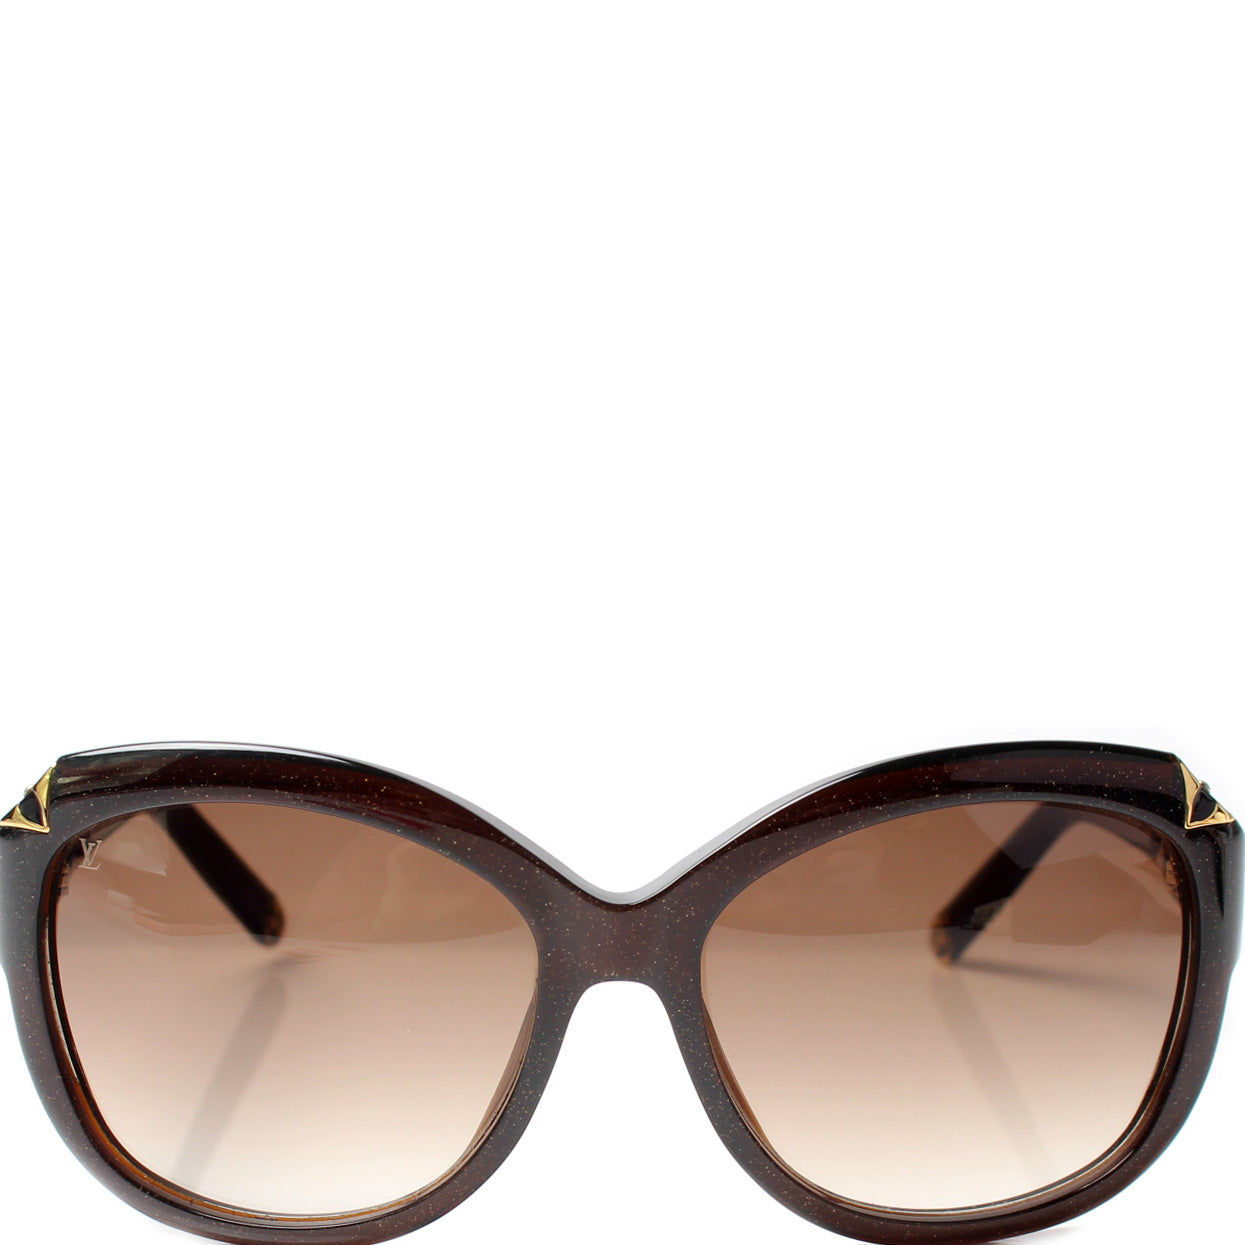 louis vuitton sunglasses womens price, Off 65%